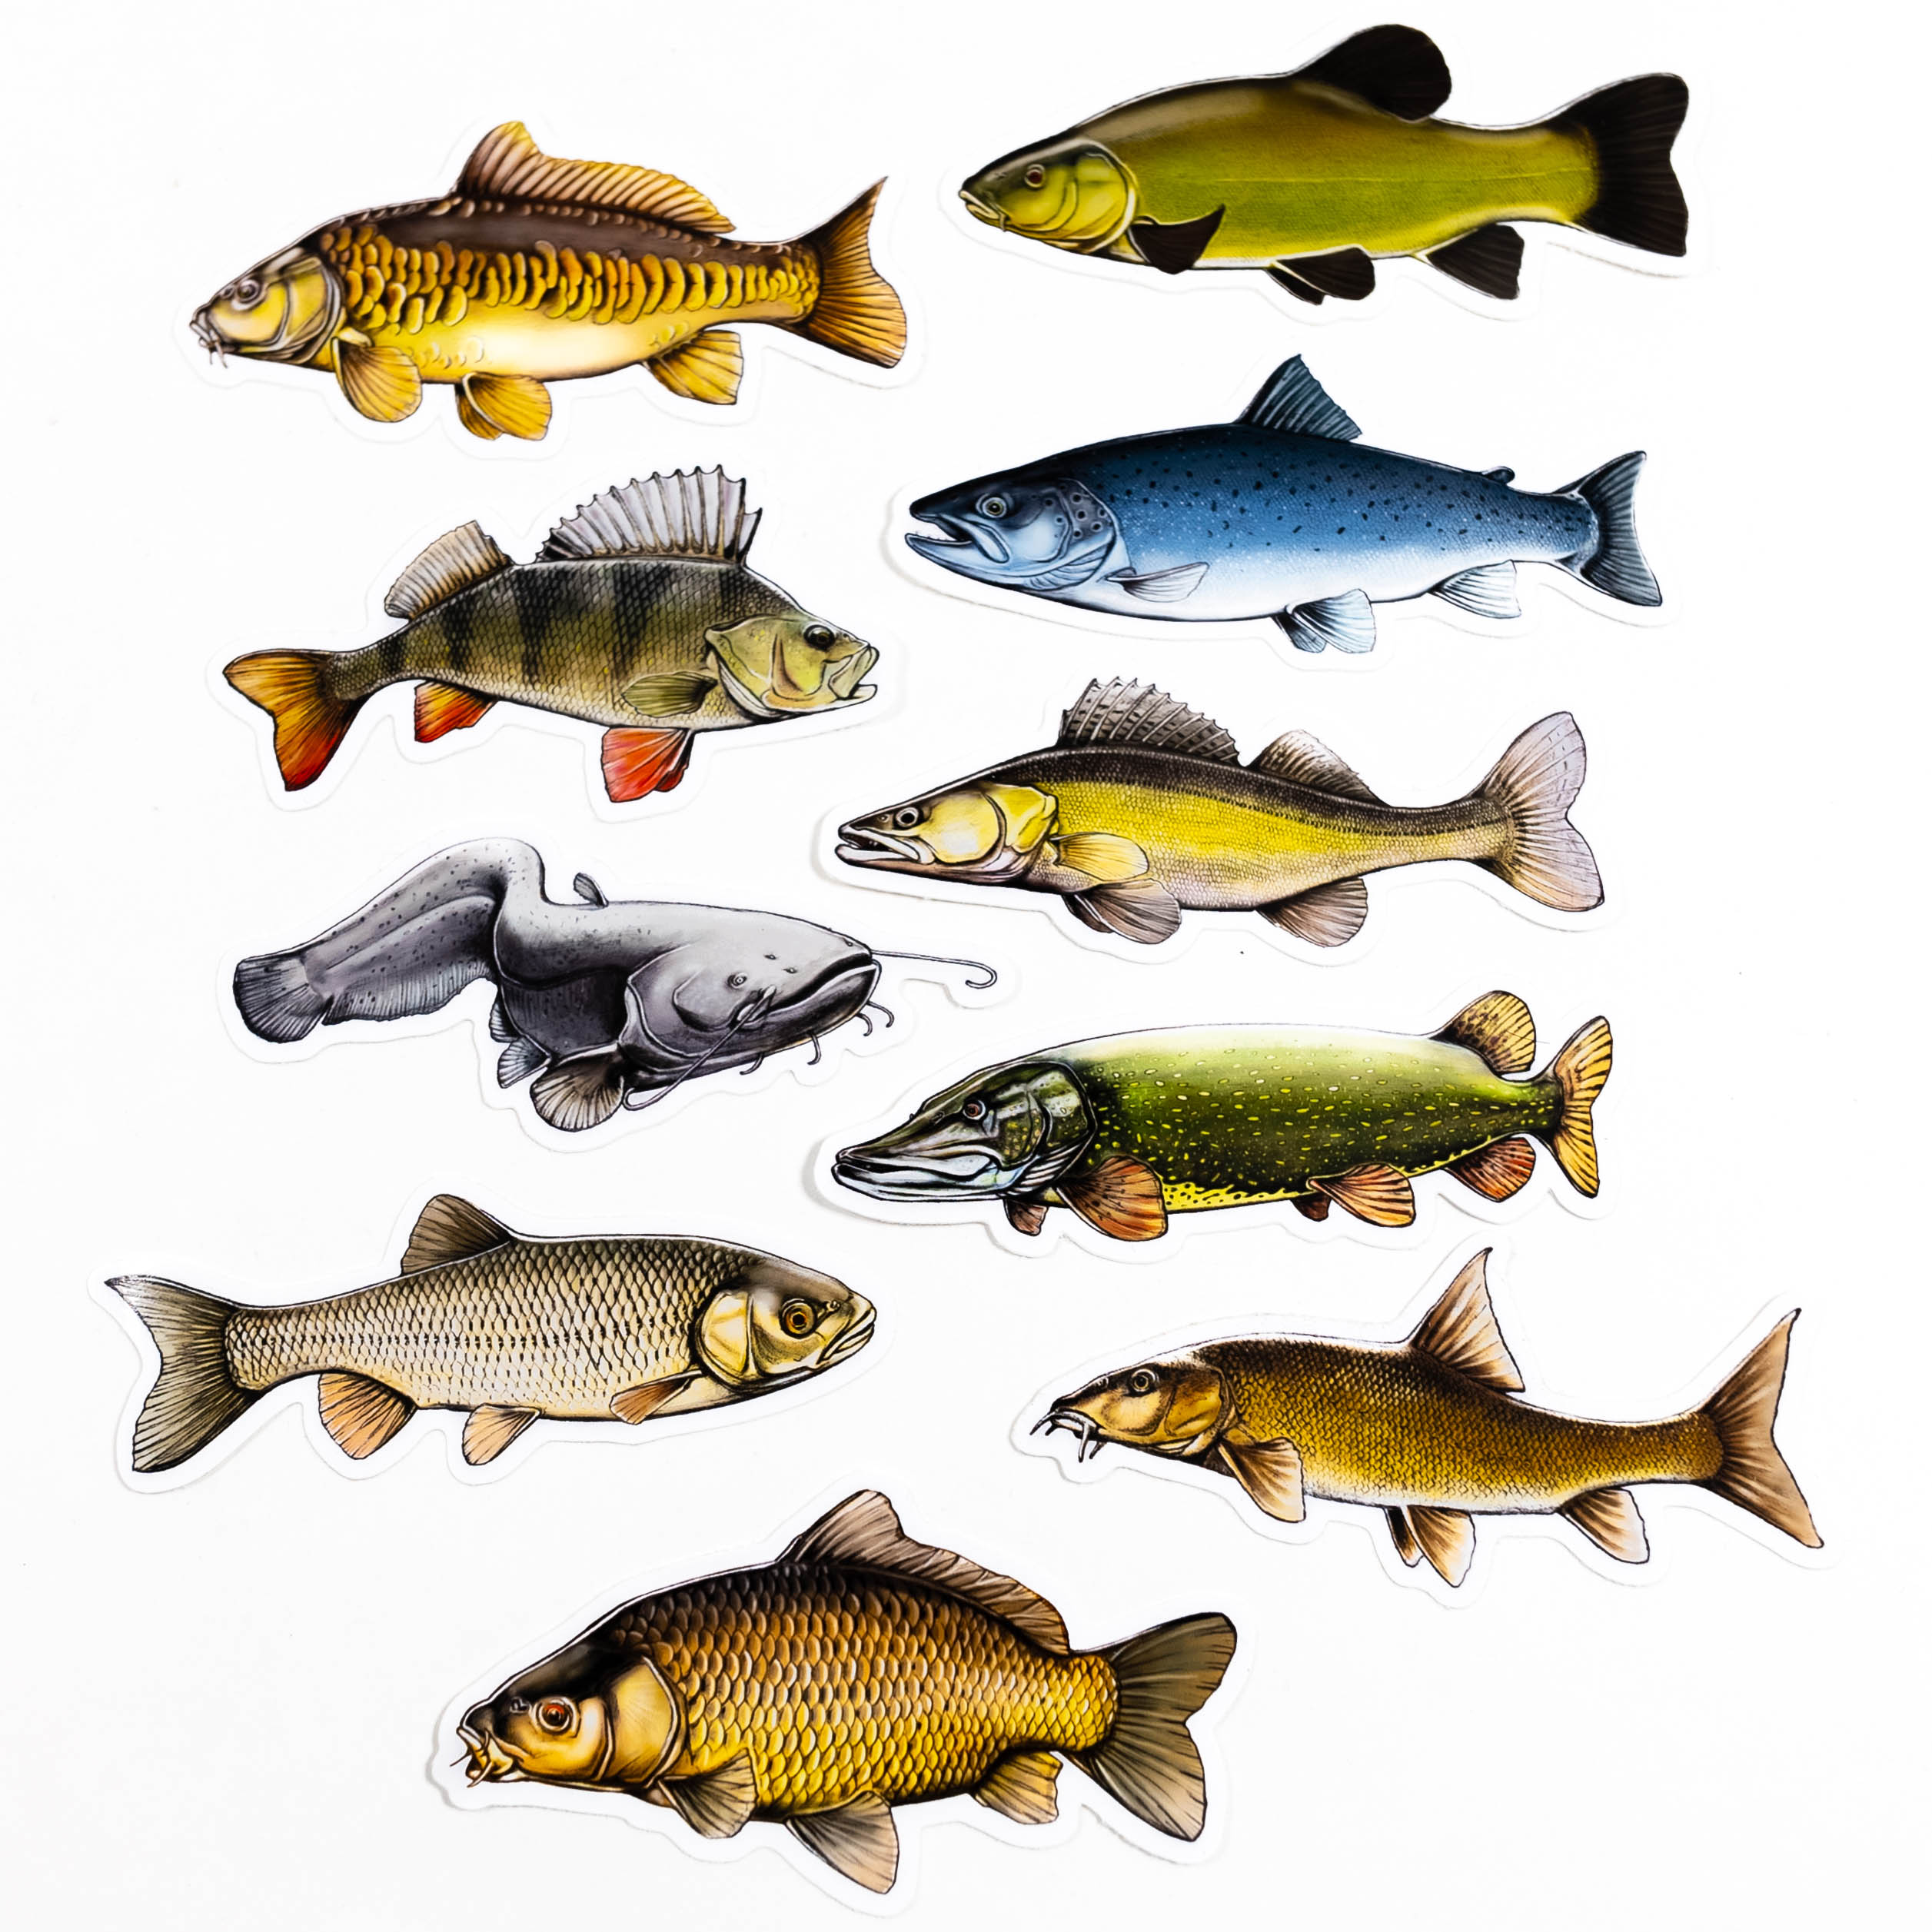 Fishing Sticker Pack | Sticker